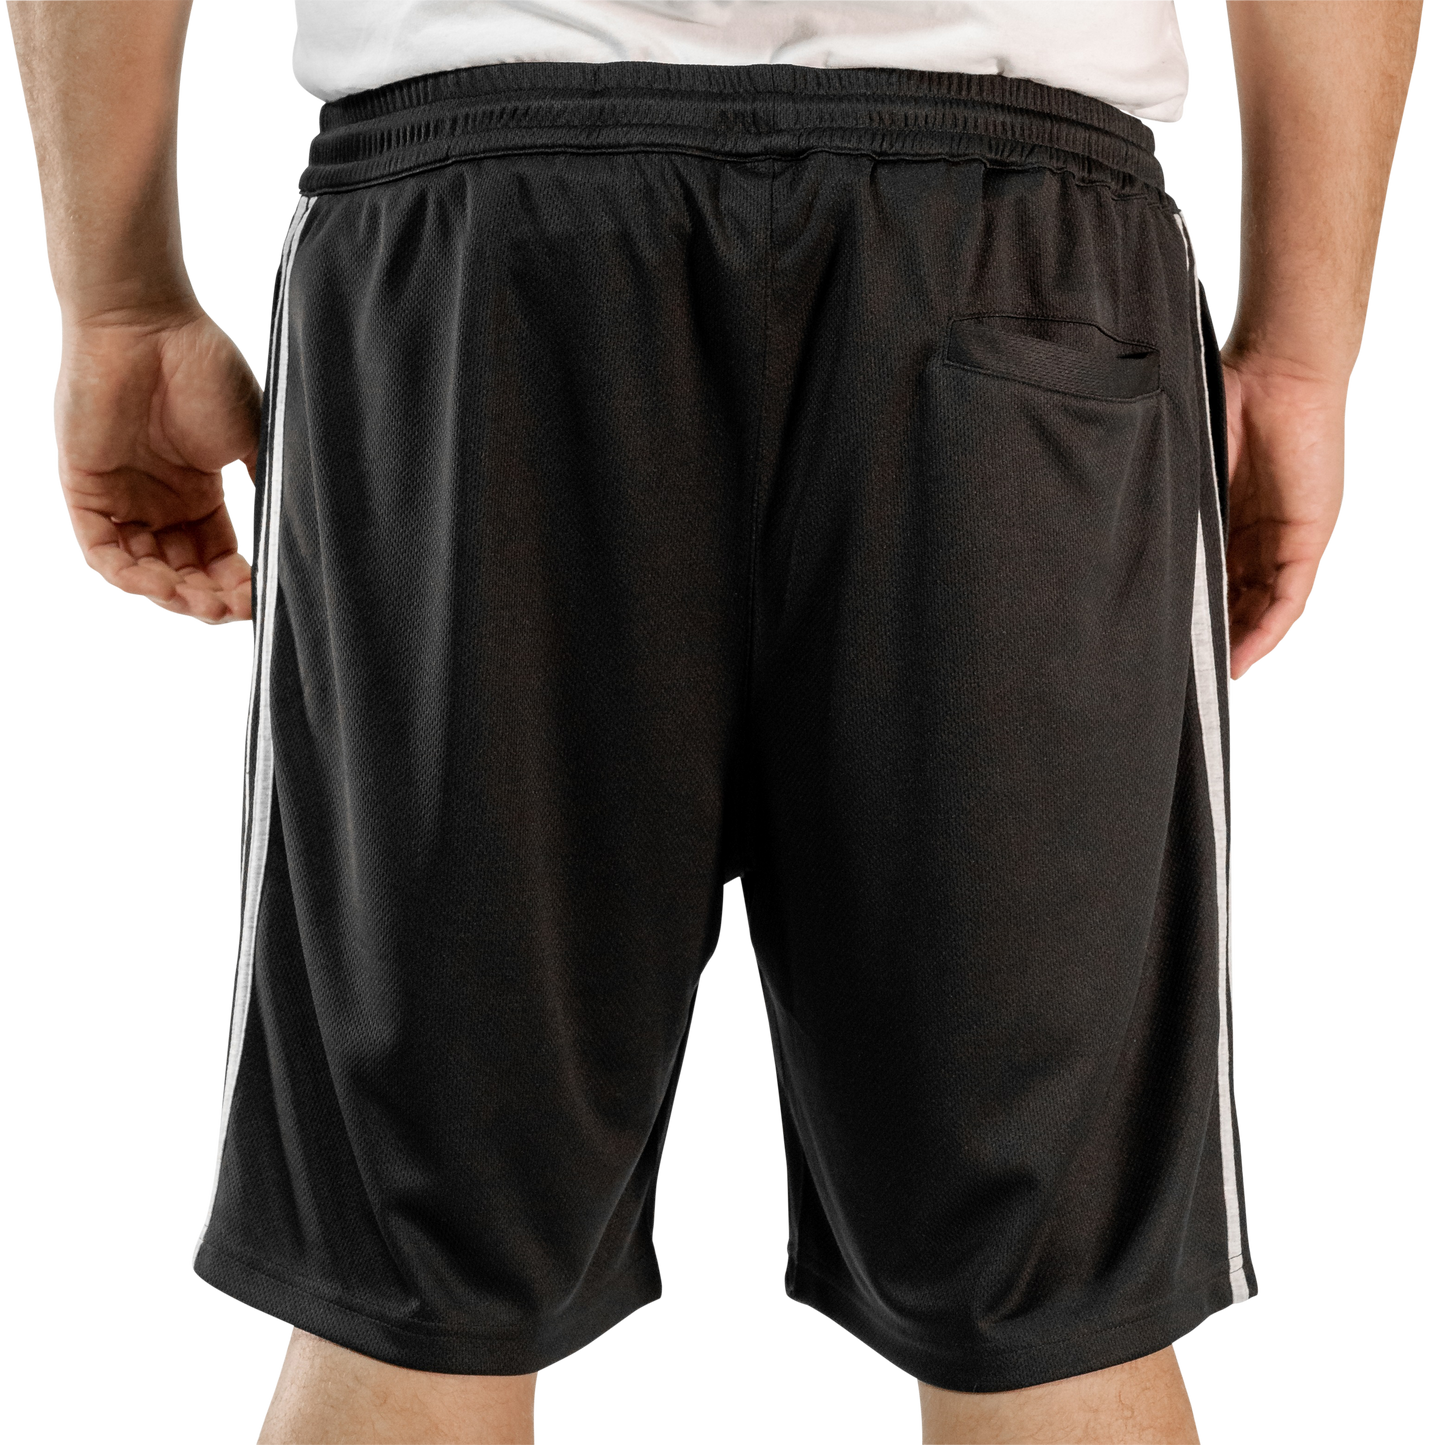 Esky Raiders Basketball Shorts